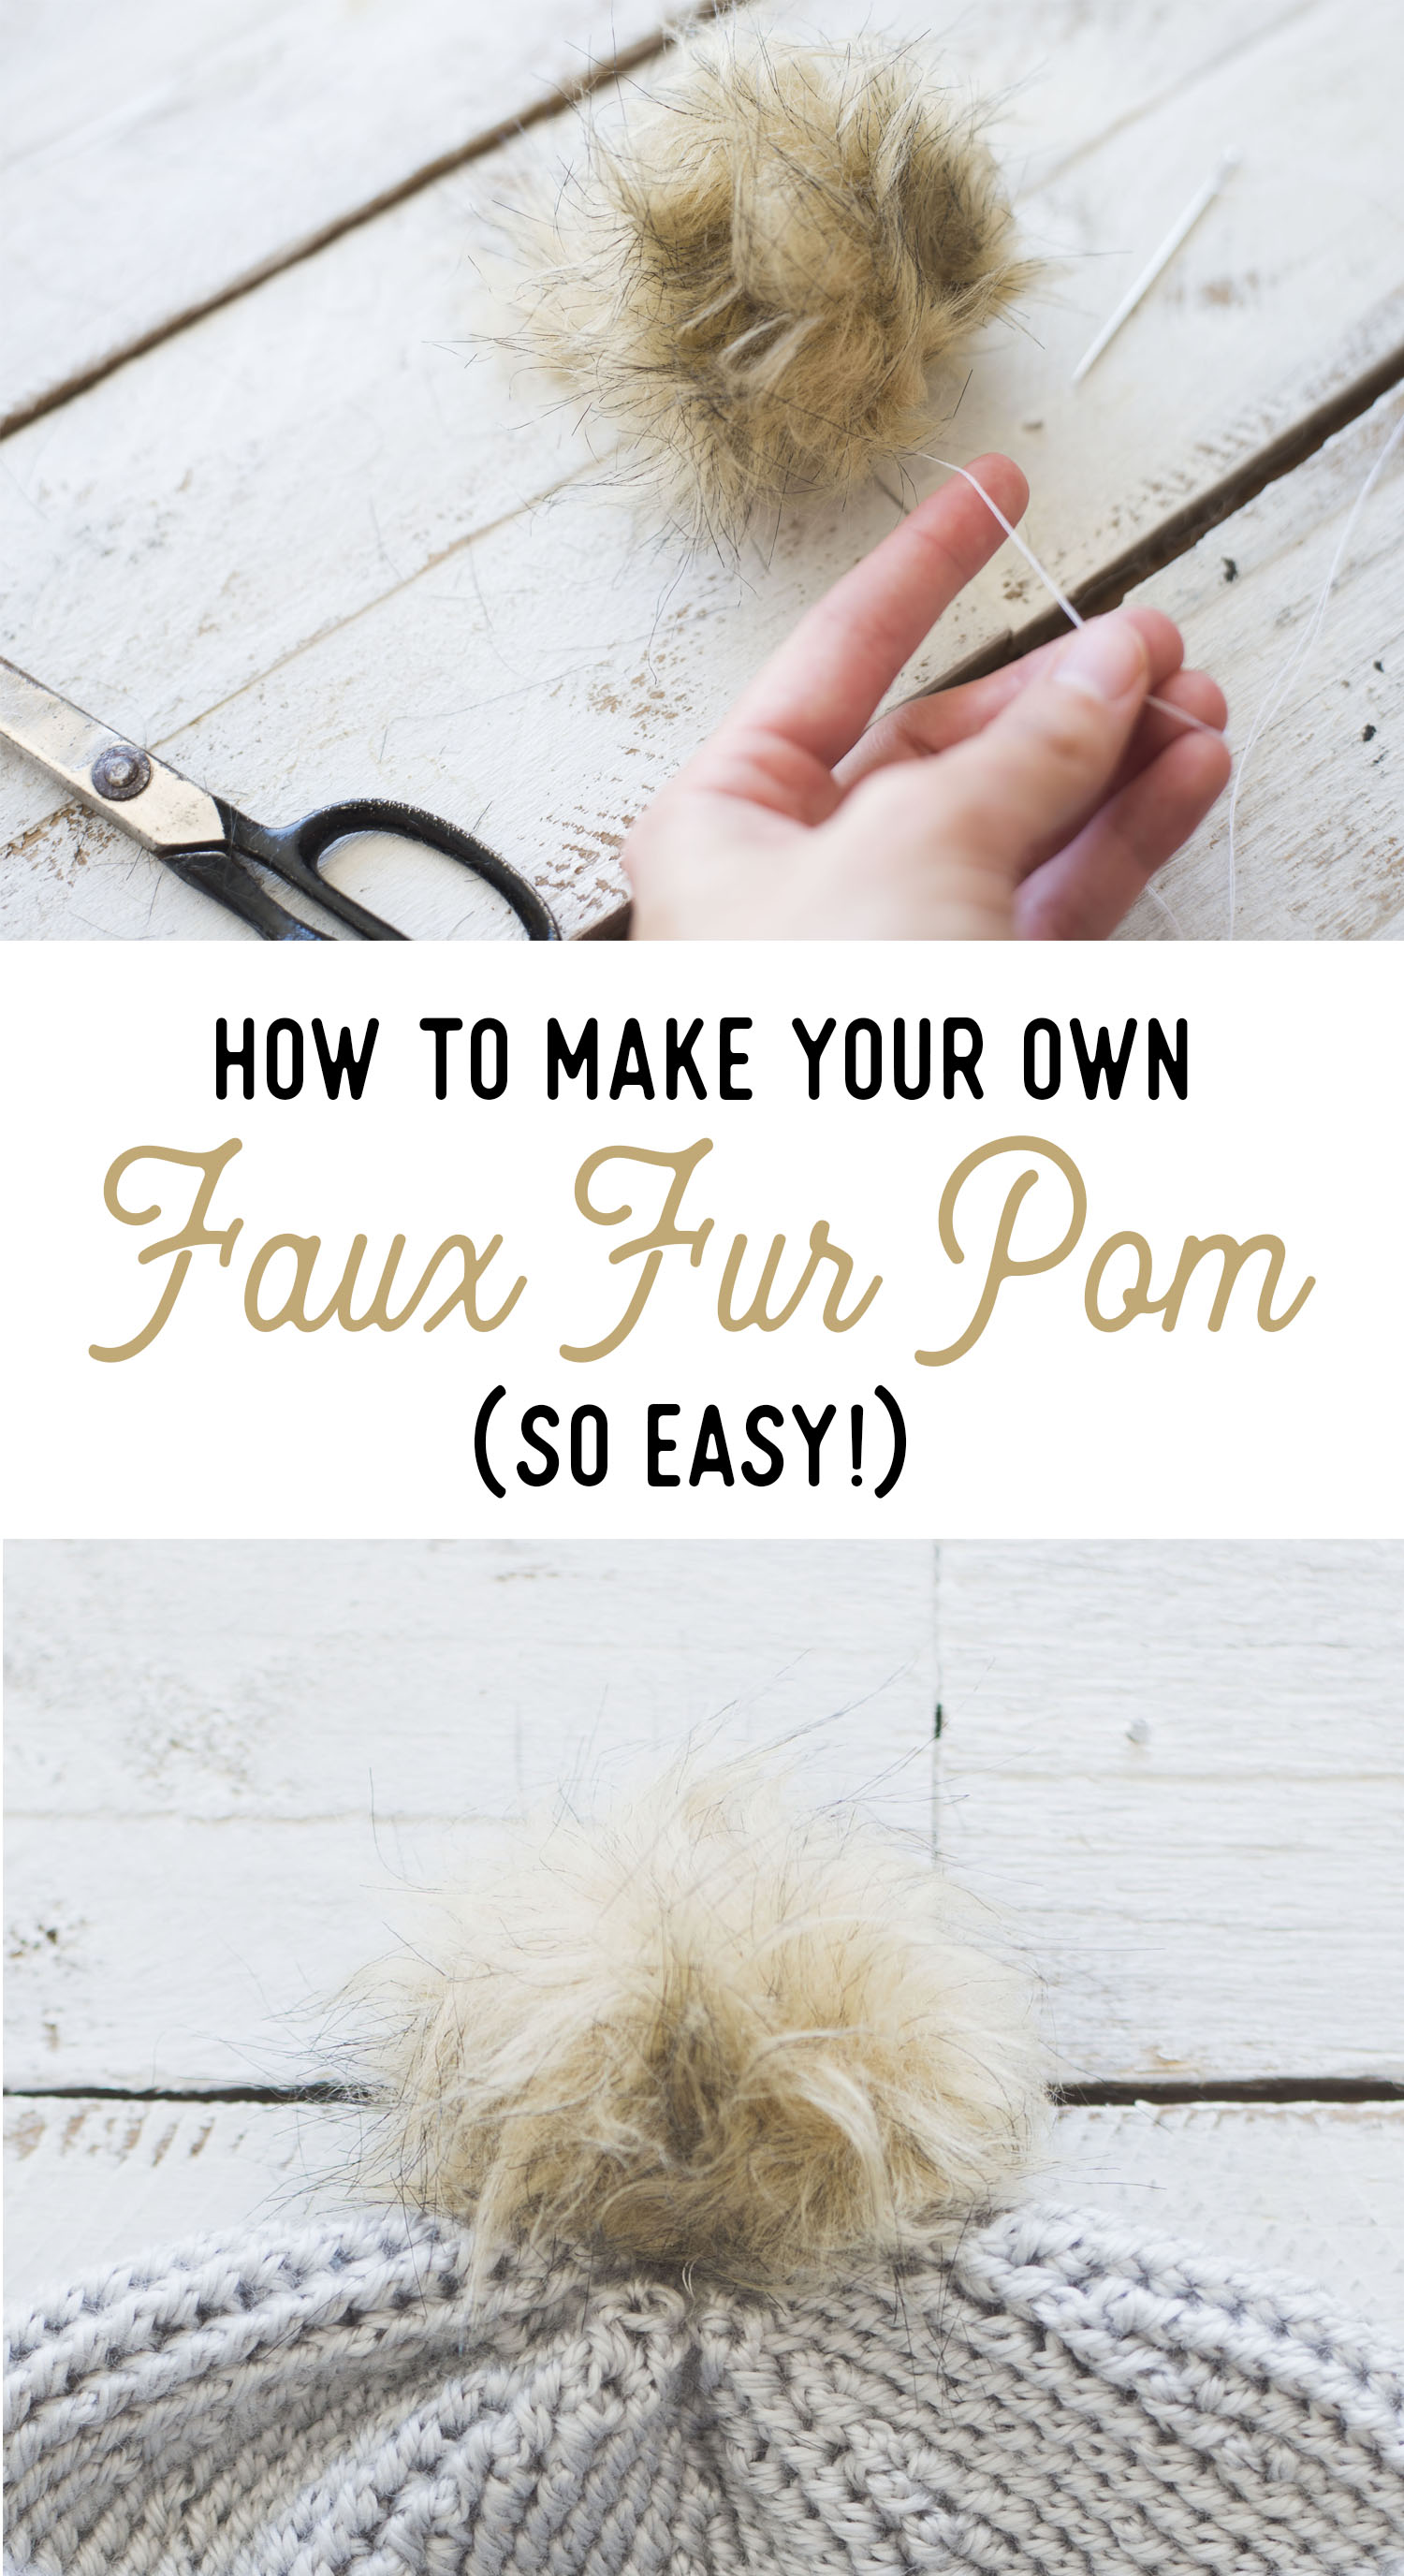 How to Make a Faux Fur Pom Pom with a Square 